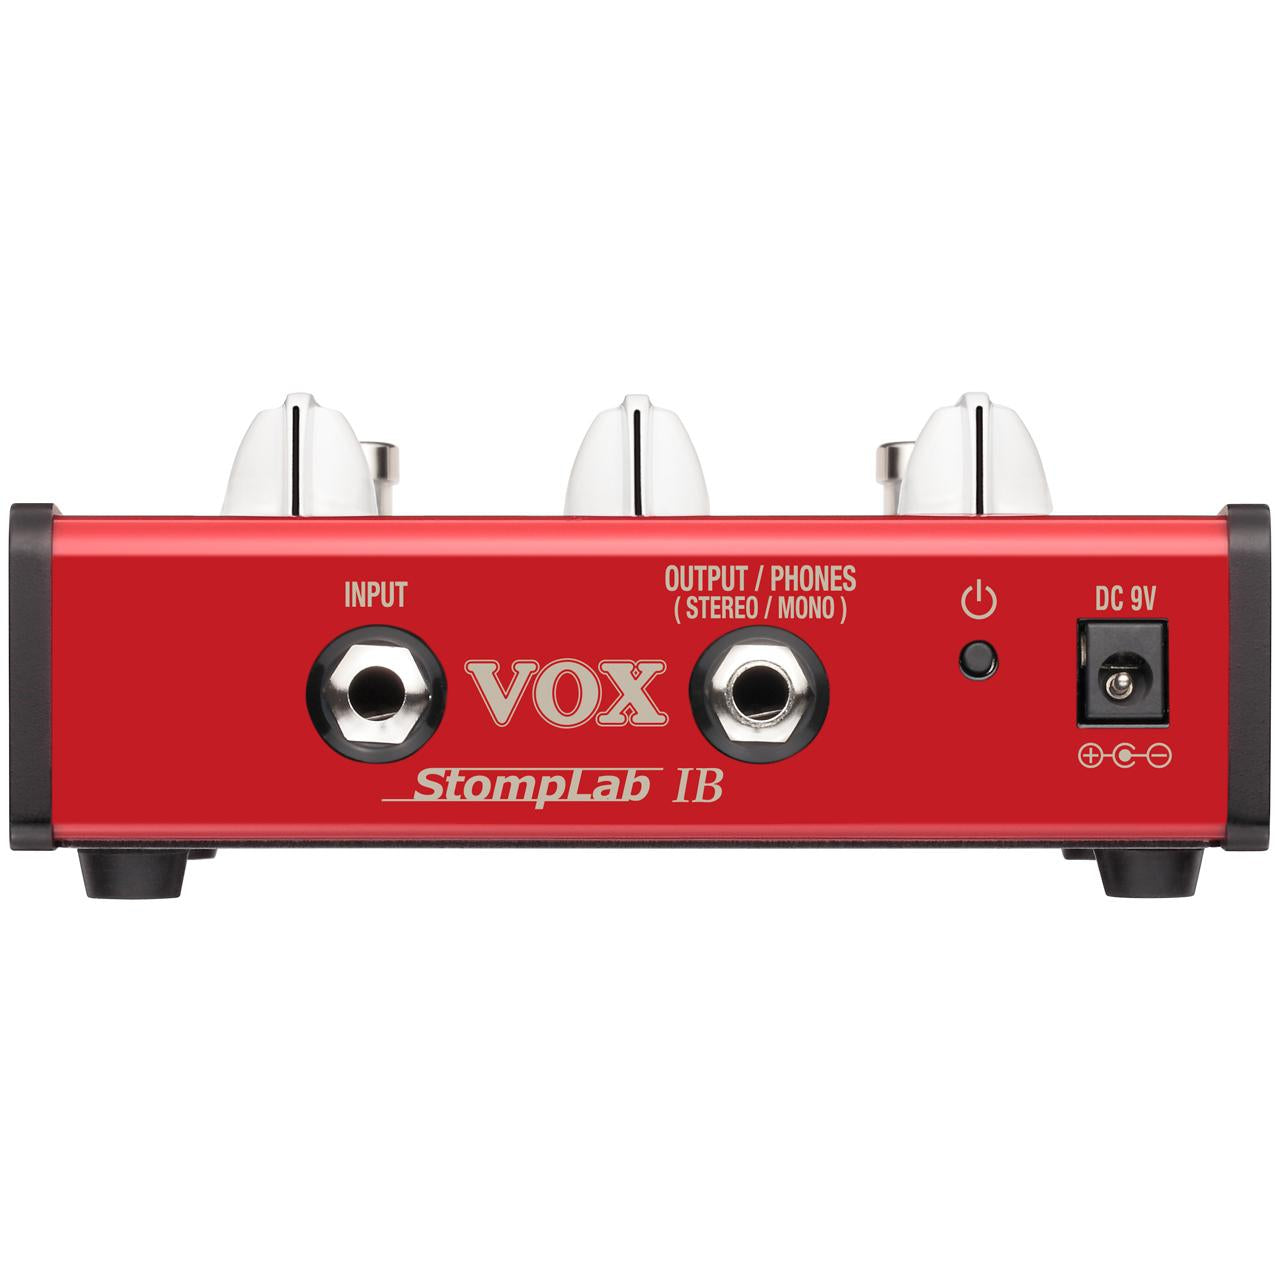 Vox Stomplab IB